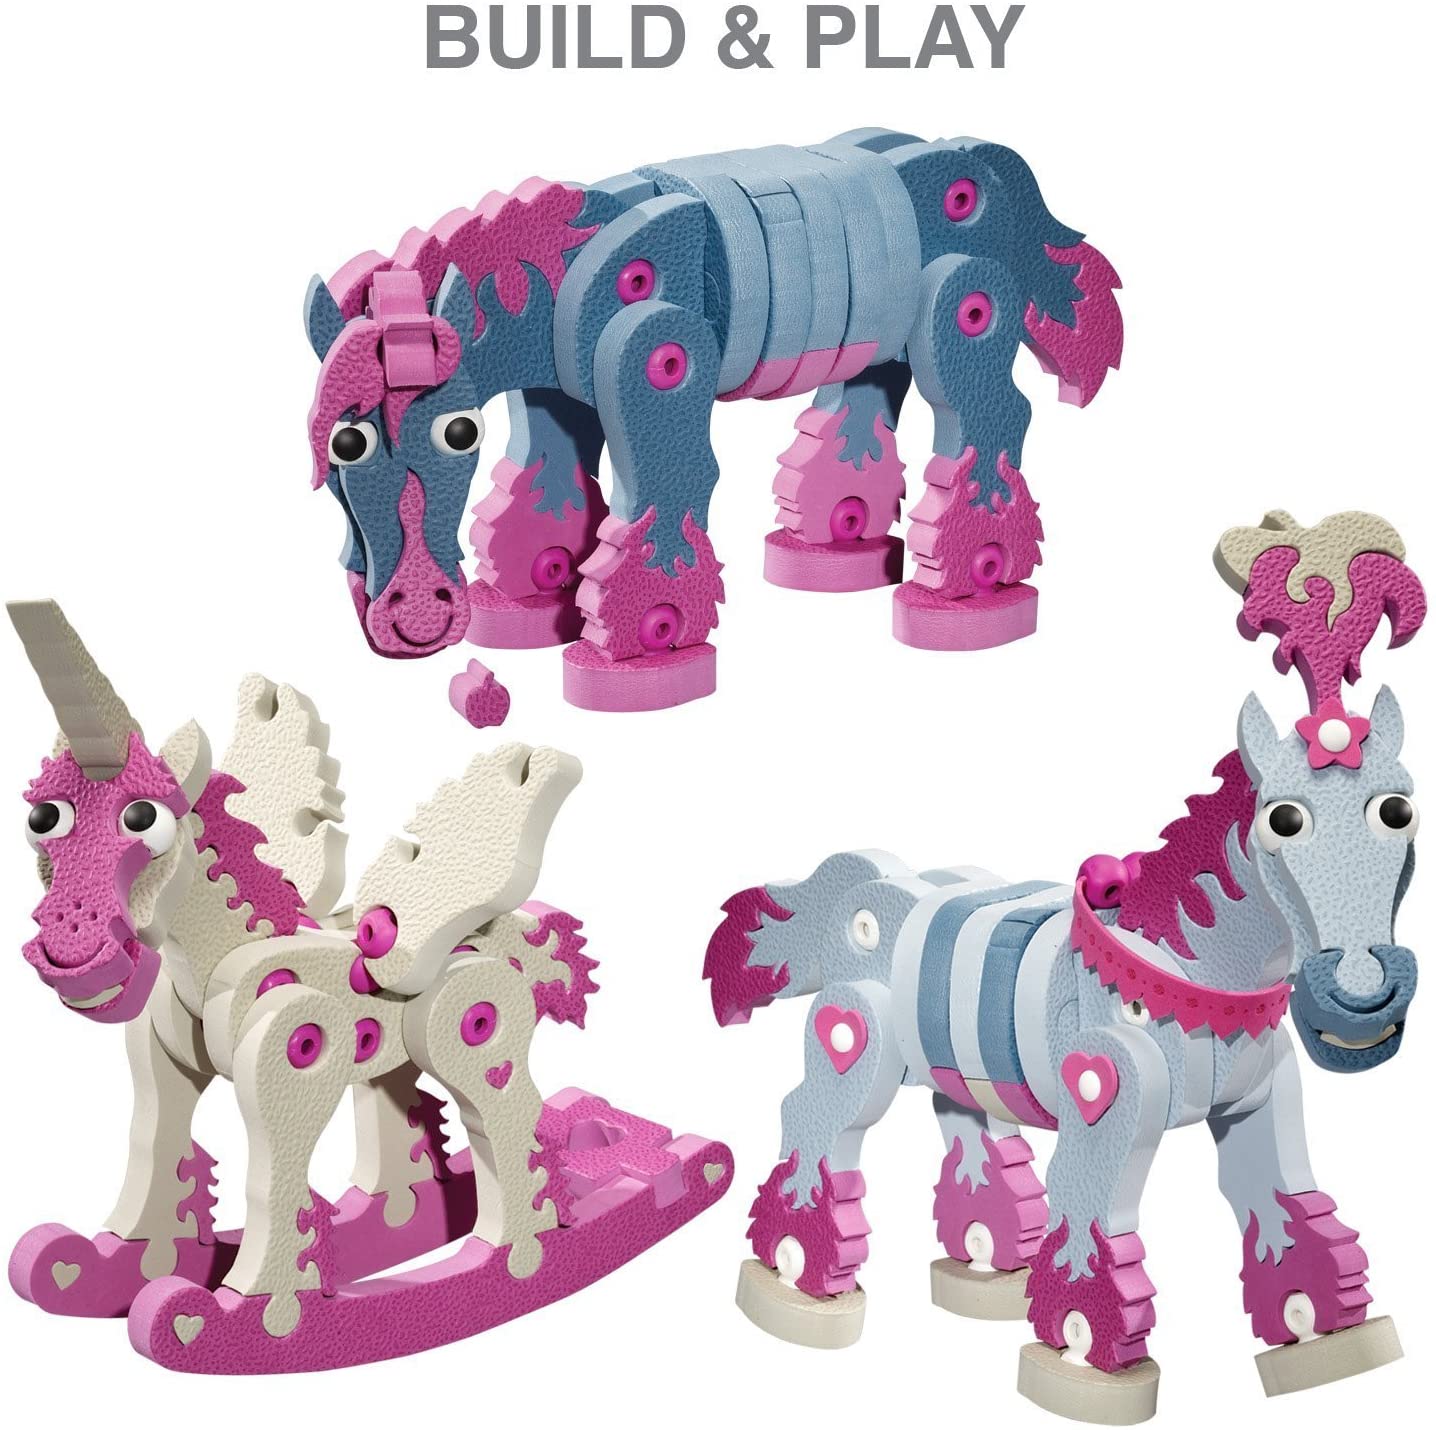 Bloco Toys Horses and Unicorns BC-25006 